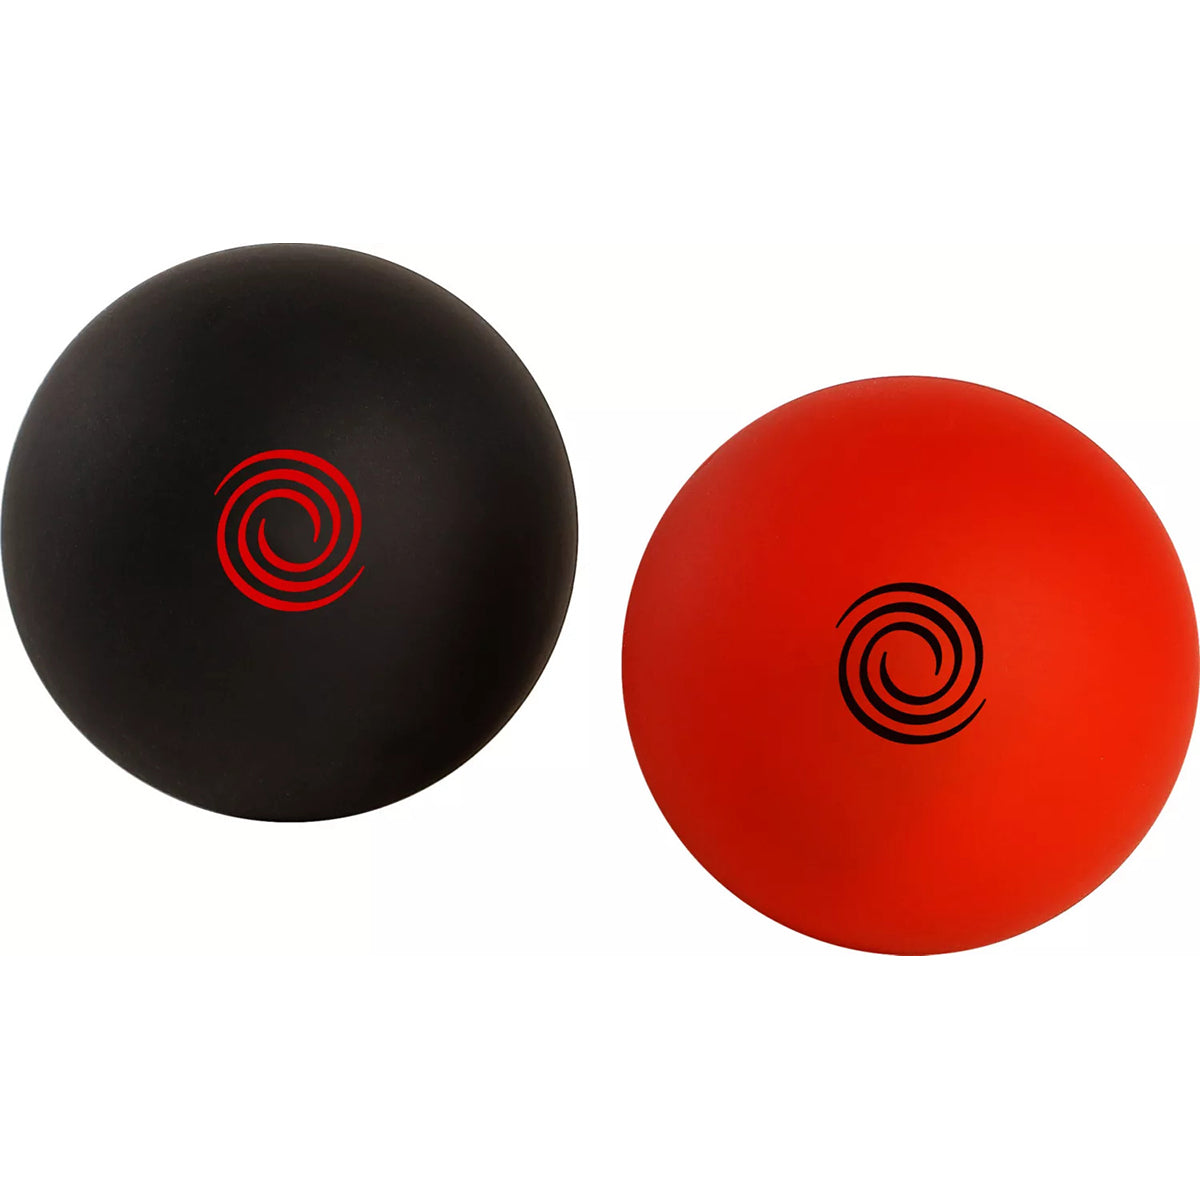 Odyssey Weighted Golf Putt Balls - 2-Pack - Red/Black Odyssey